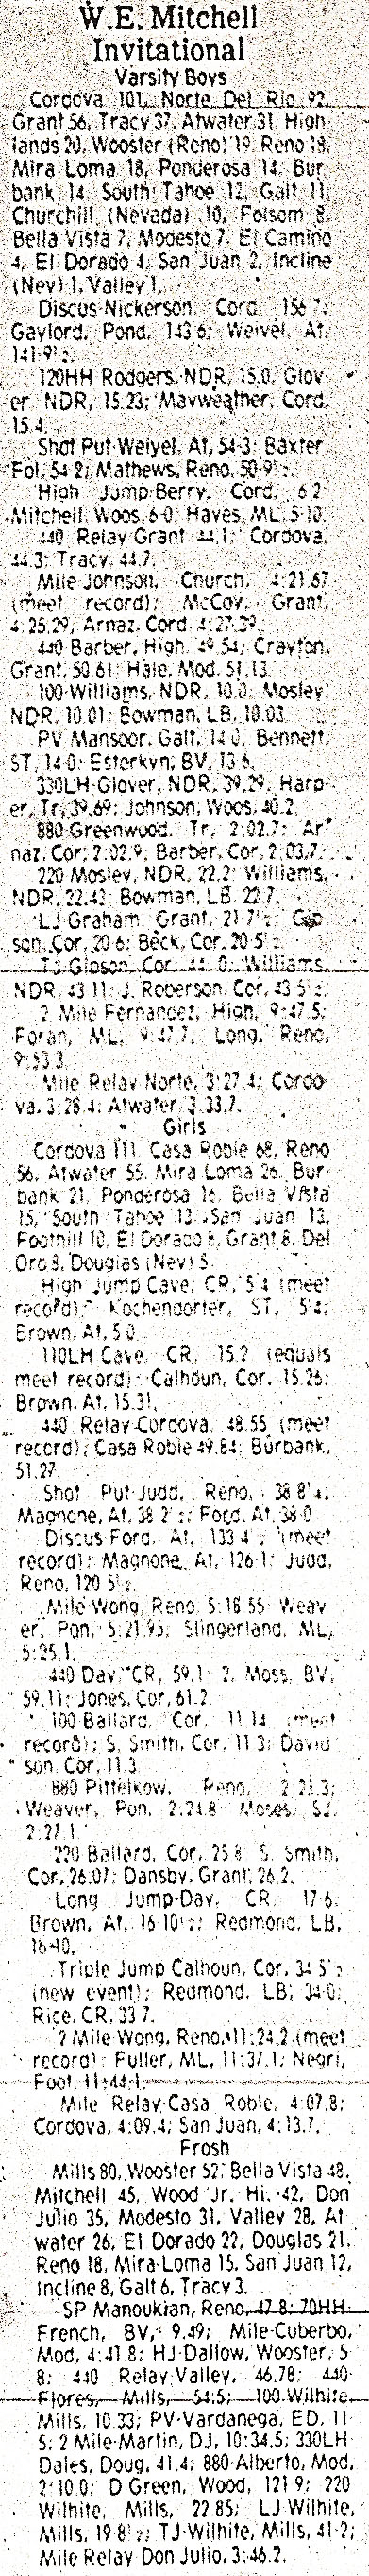 1979 Mitchell Invitational Results